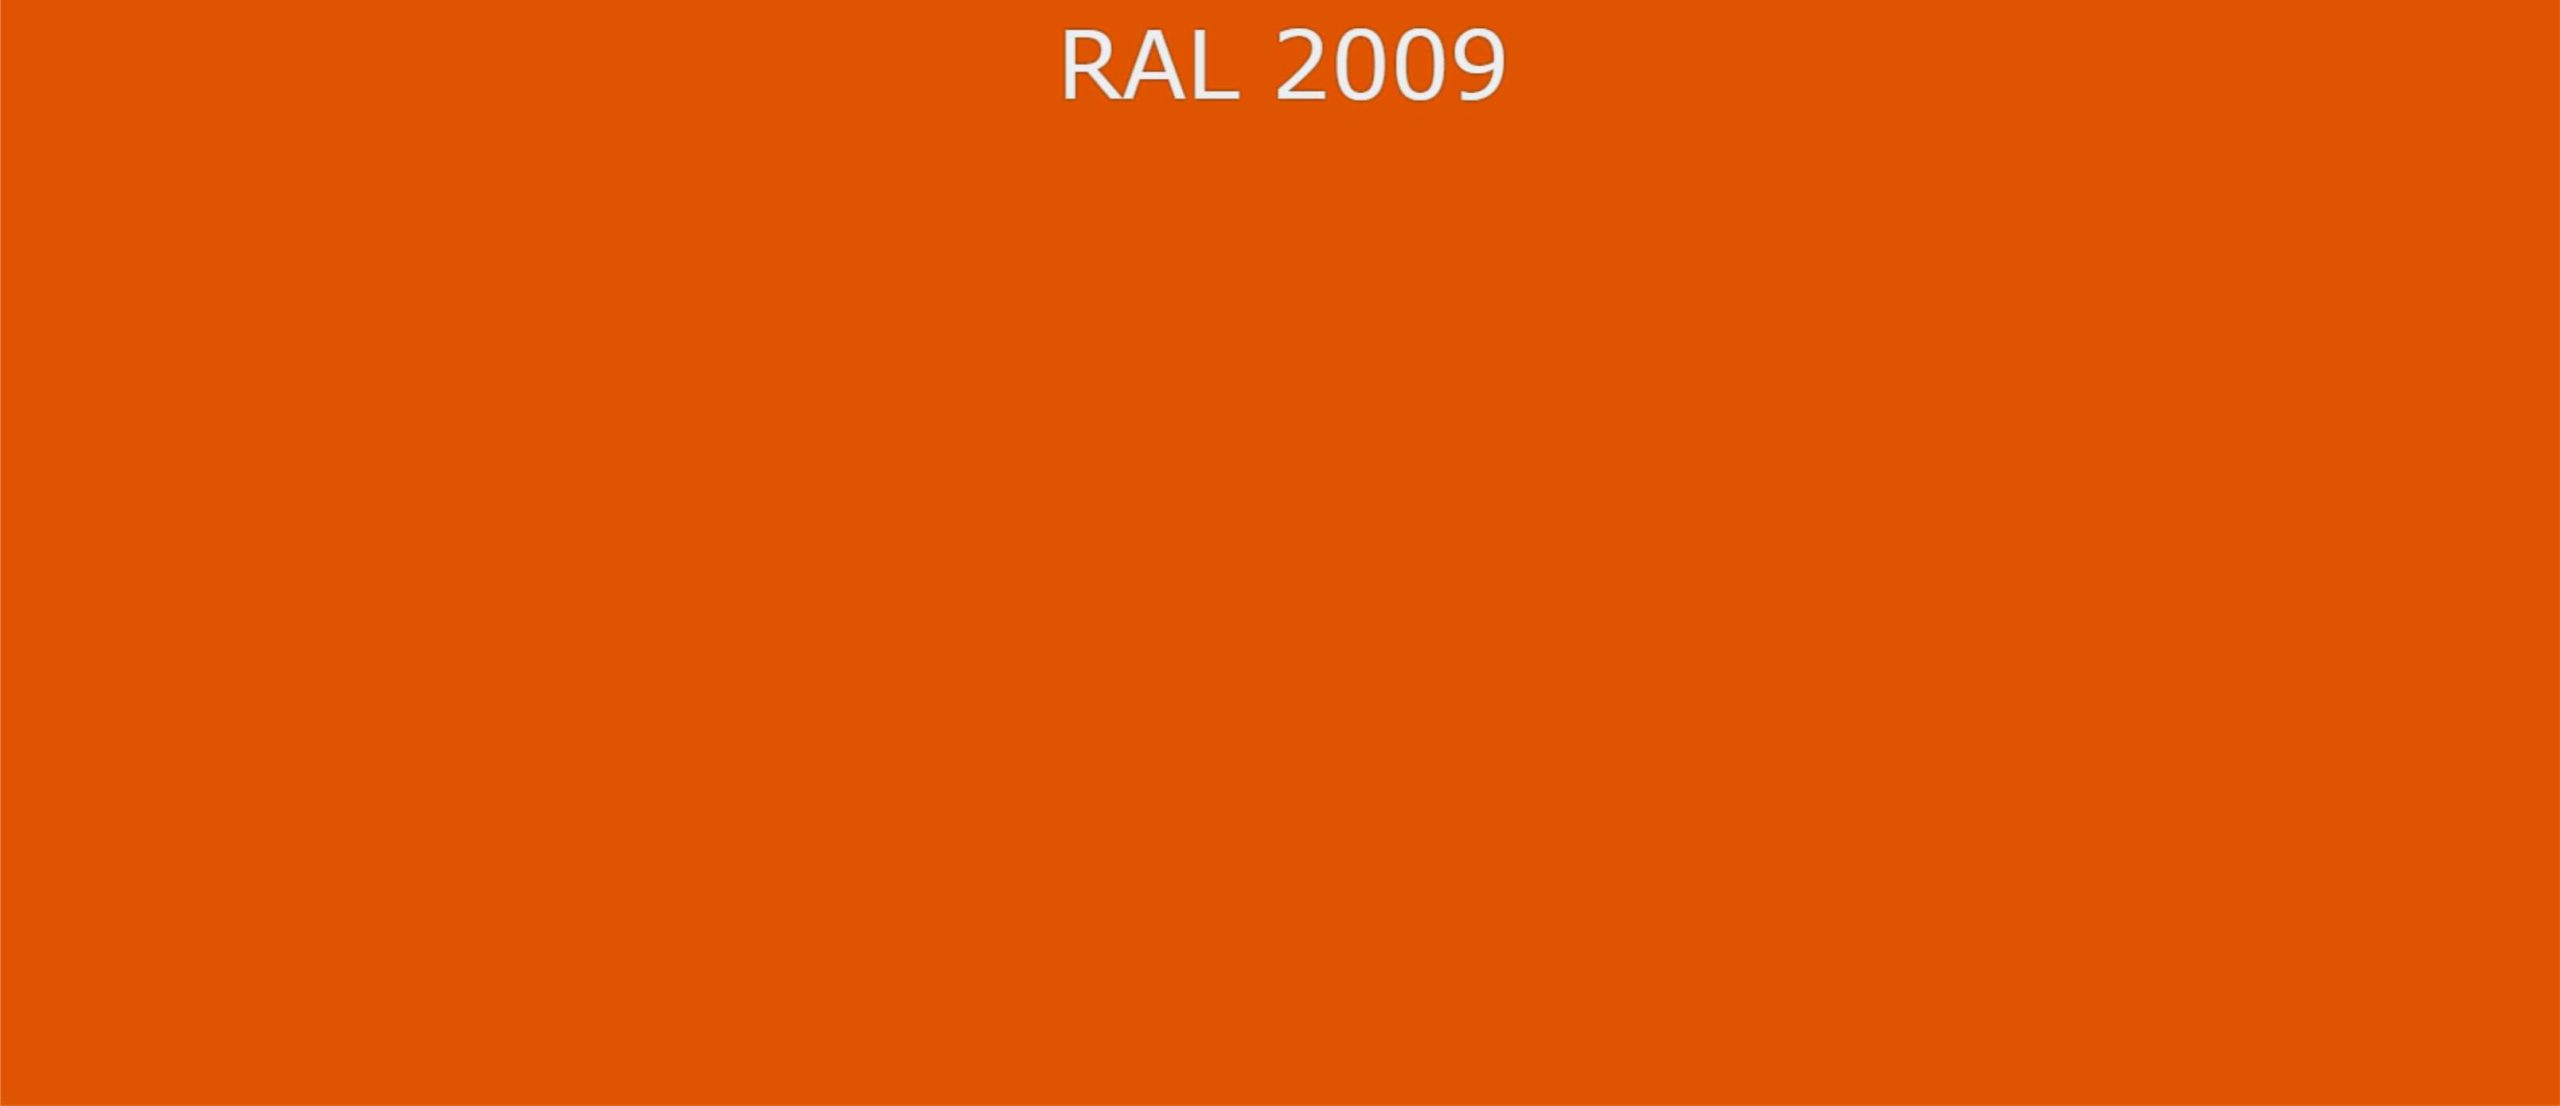 Рал 1 читать. RAL 2009 КАМАЗ. Краска оранжевая КАМАЗ рал 2009. Рал 060 85 10. Рал 260 70 10.